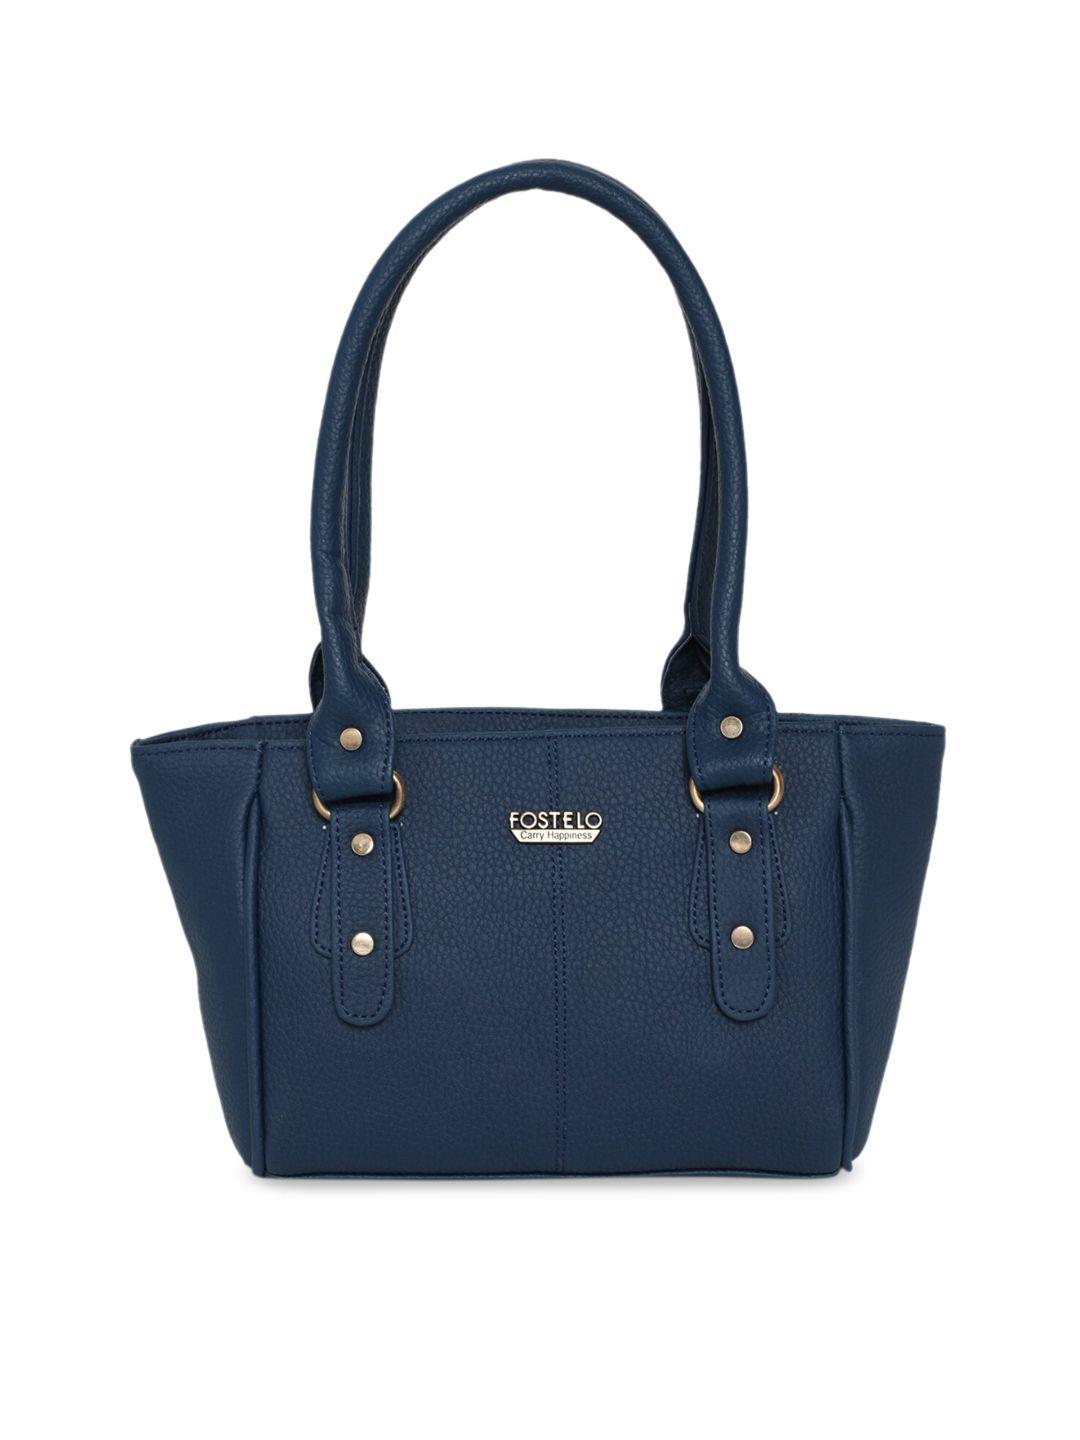 fostelo women blue structured shoulder bag